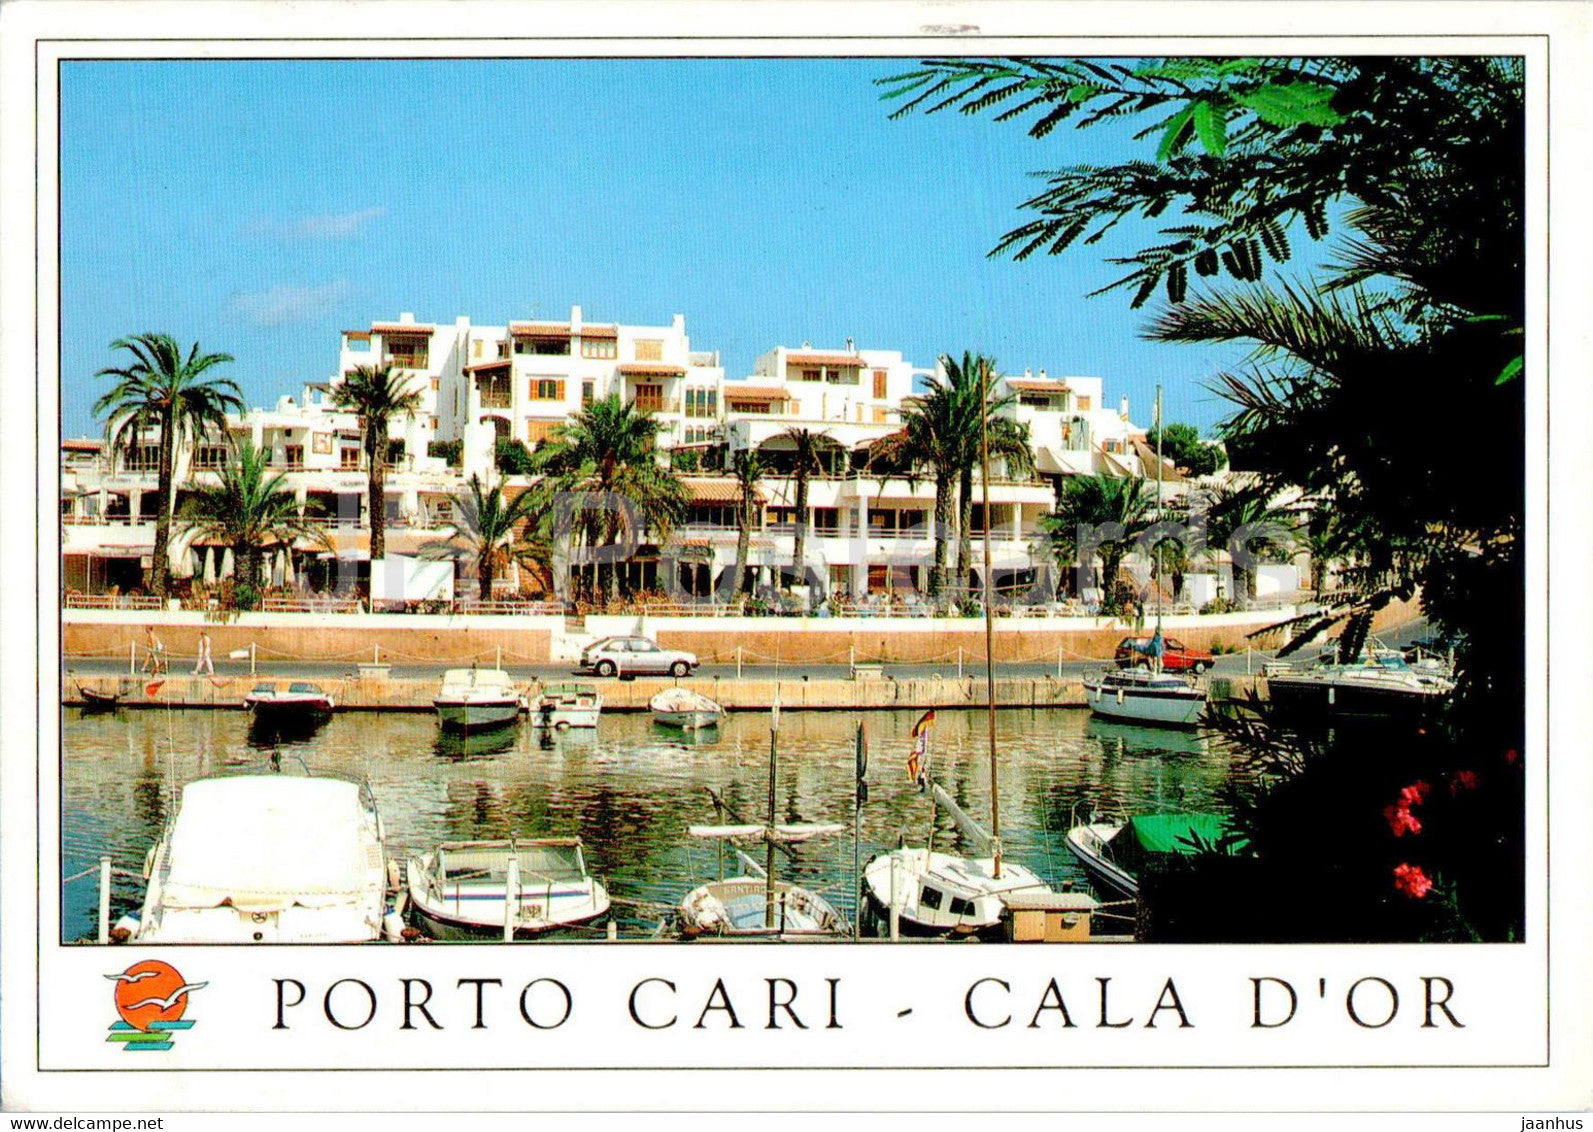 Porto Cari - Cala D'Or - Mallorca - boat - 2709 - Spain - used - JH Postcards